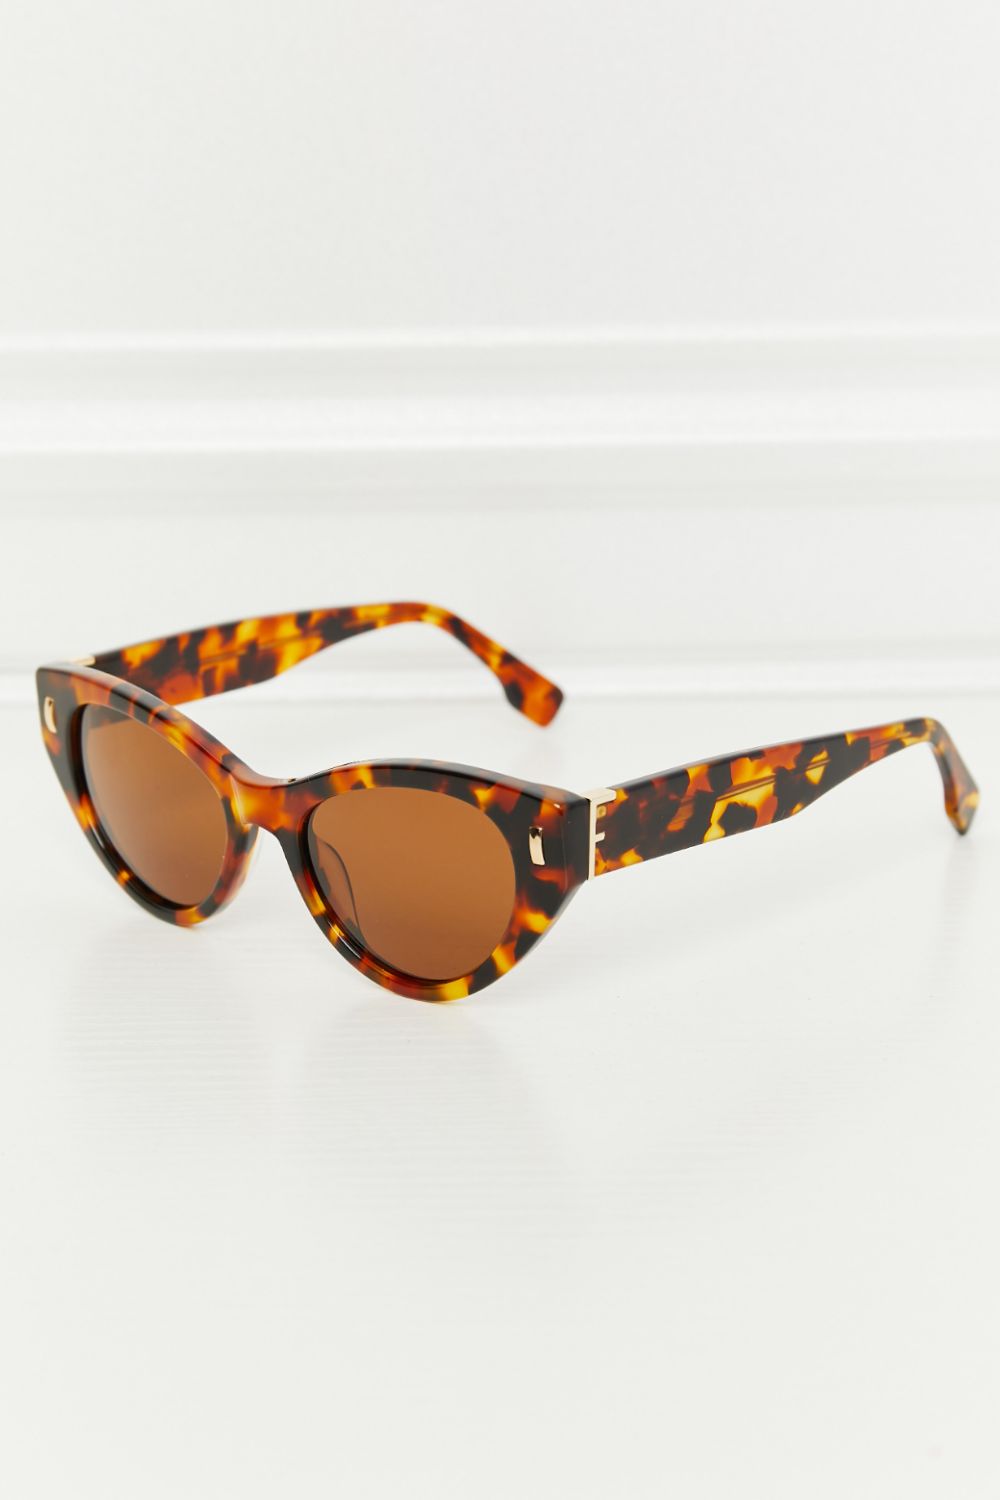 Beige Tortoiseshell Acetate Frame Sunglasses Sentient Beauty Fashions Apparel & Accessories